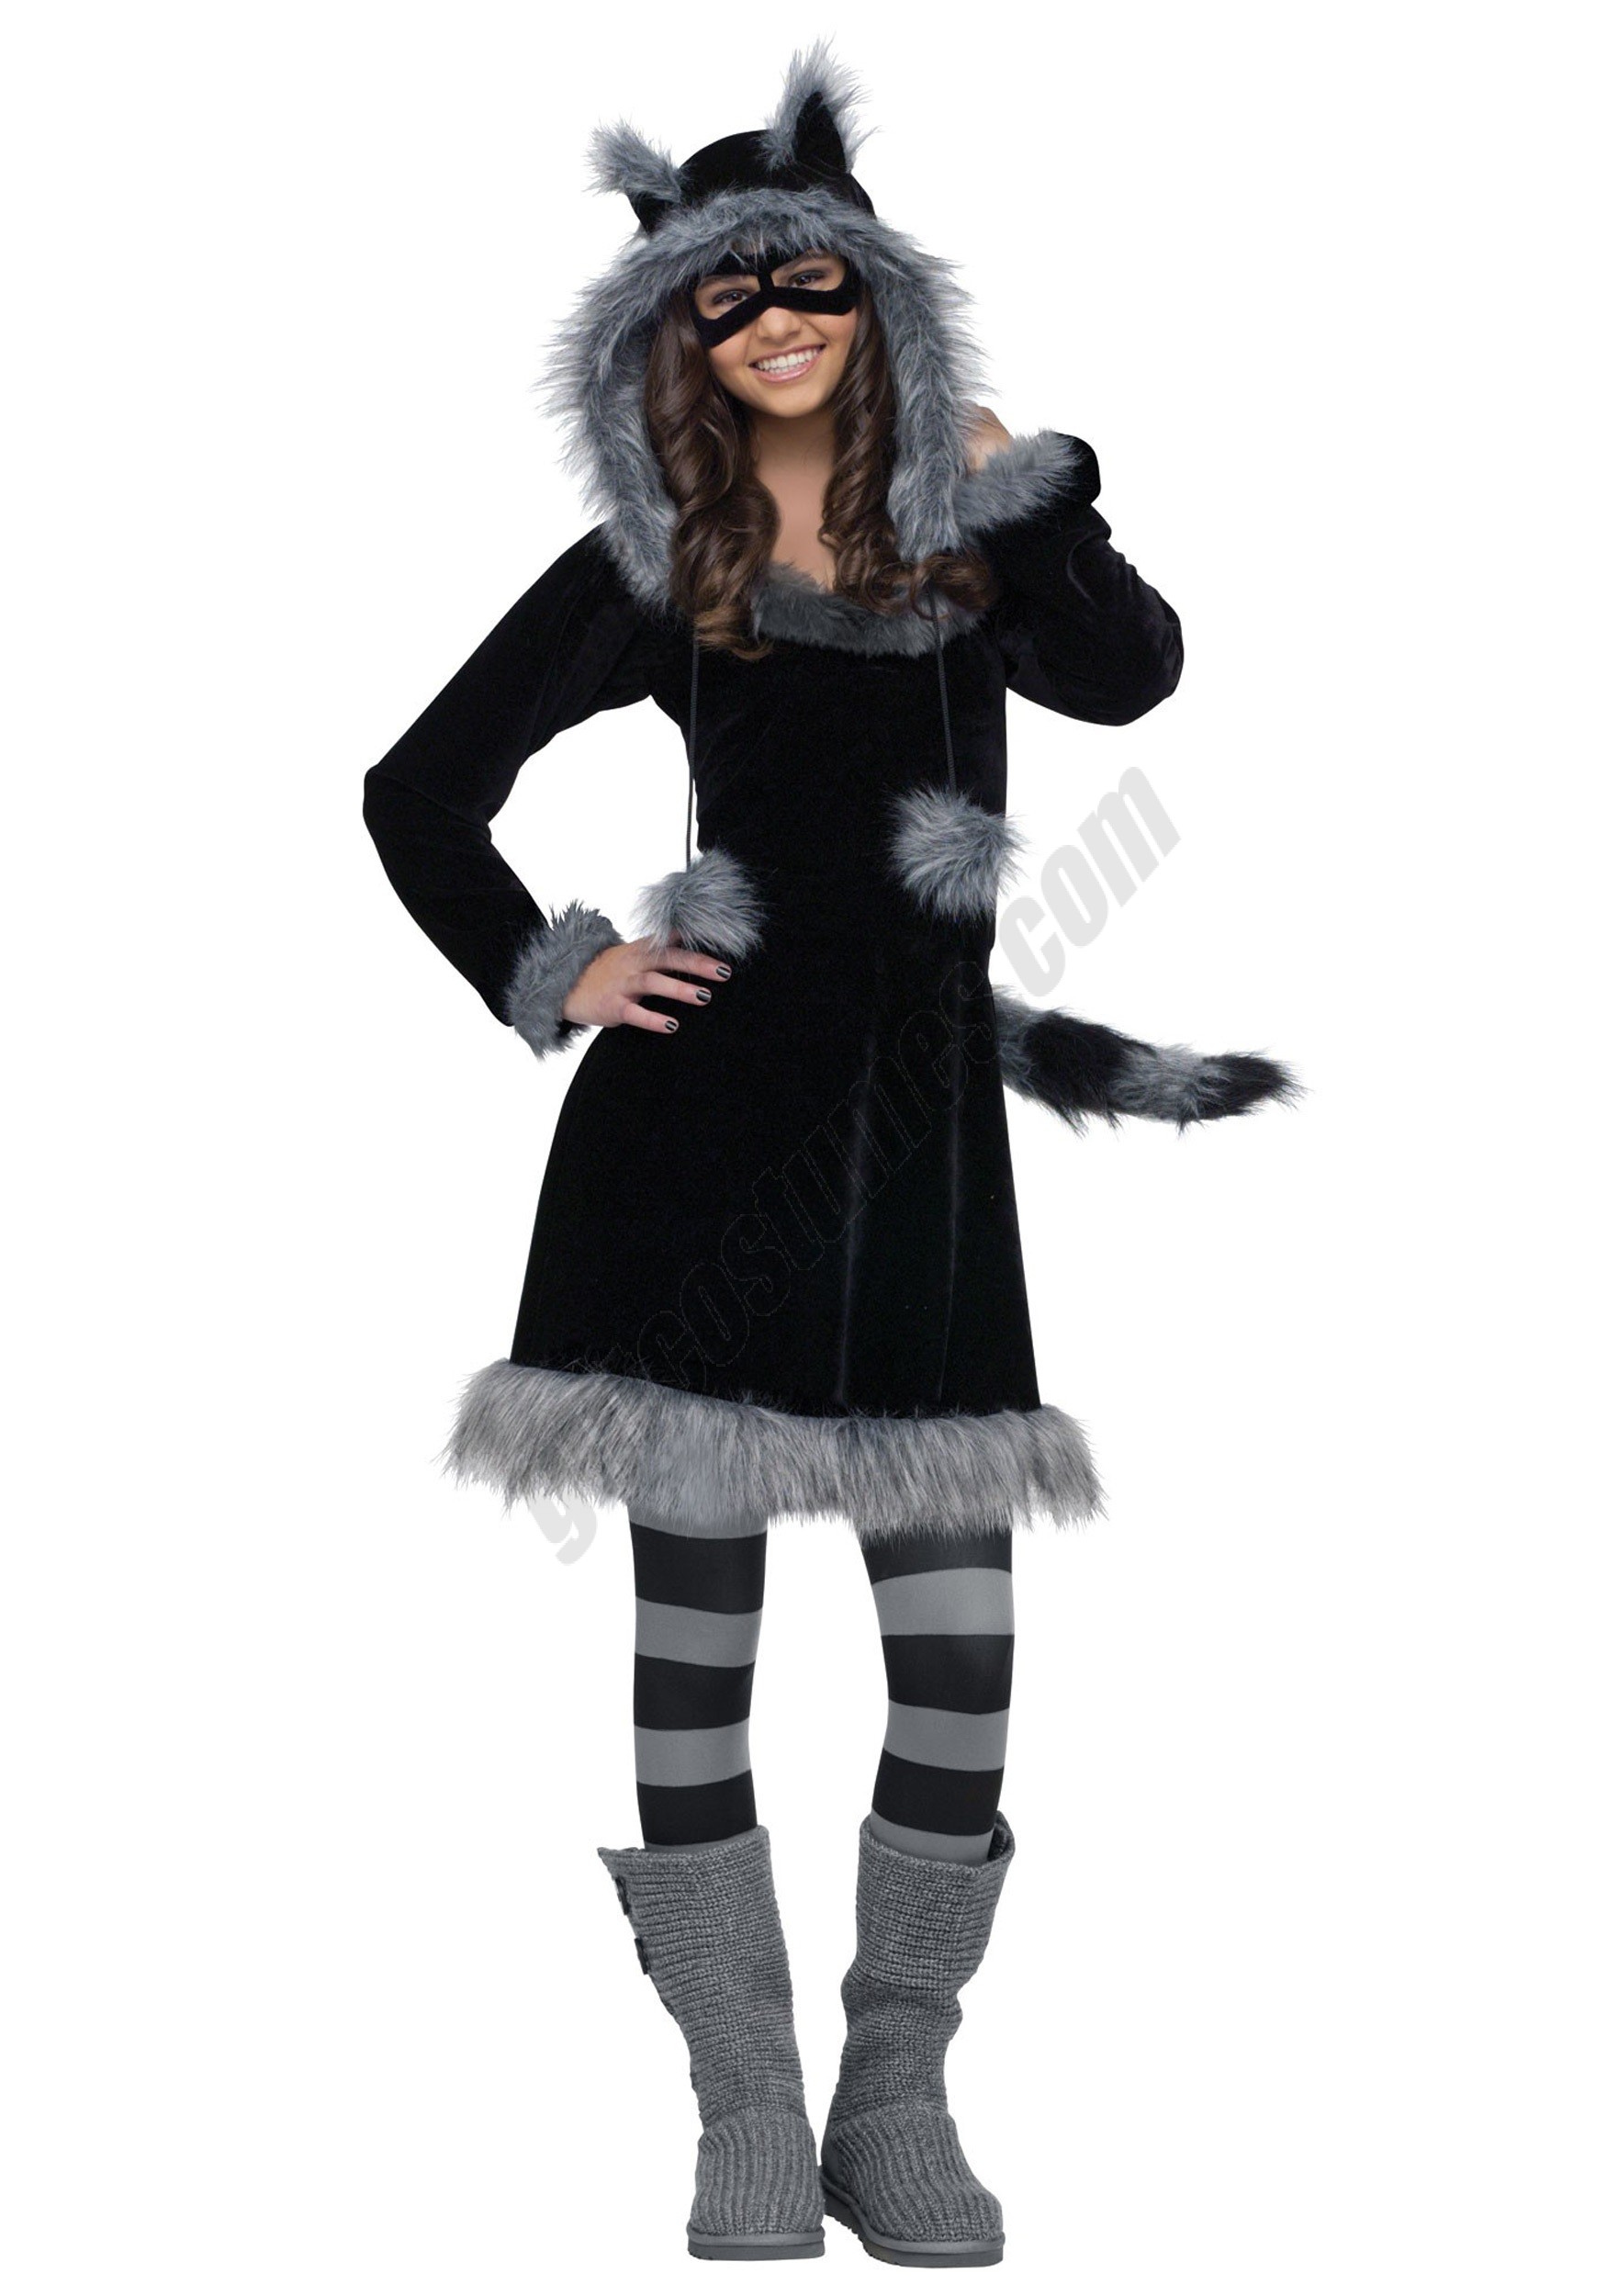 Sweet Raccoon Teen Costume Promotions - Sweet Raccoon Teen Costume Promotions